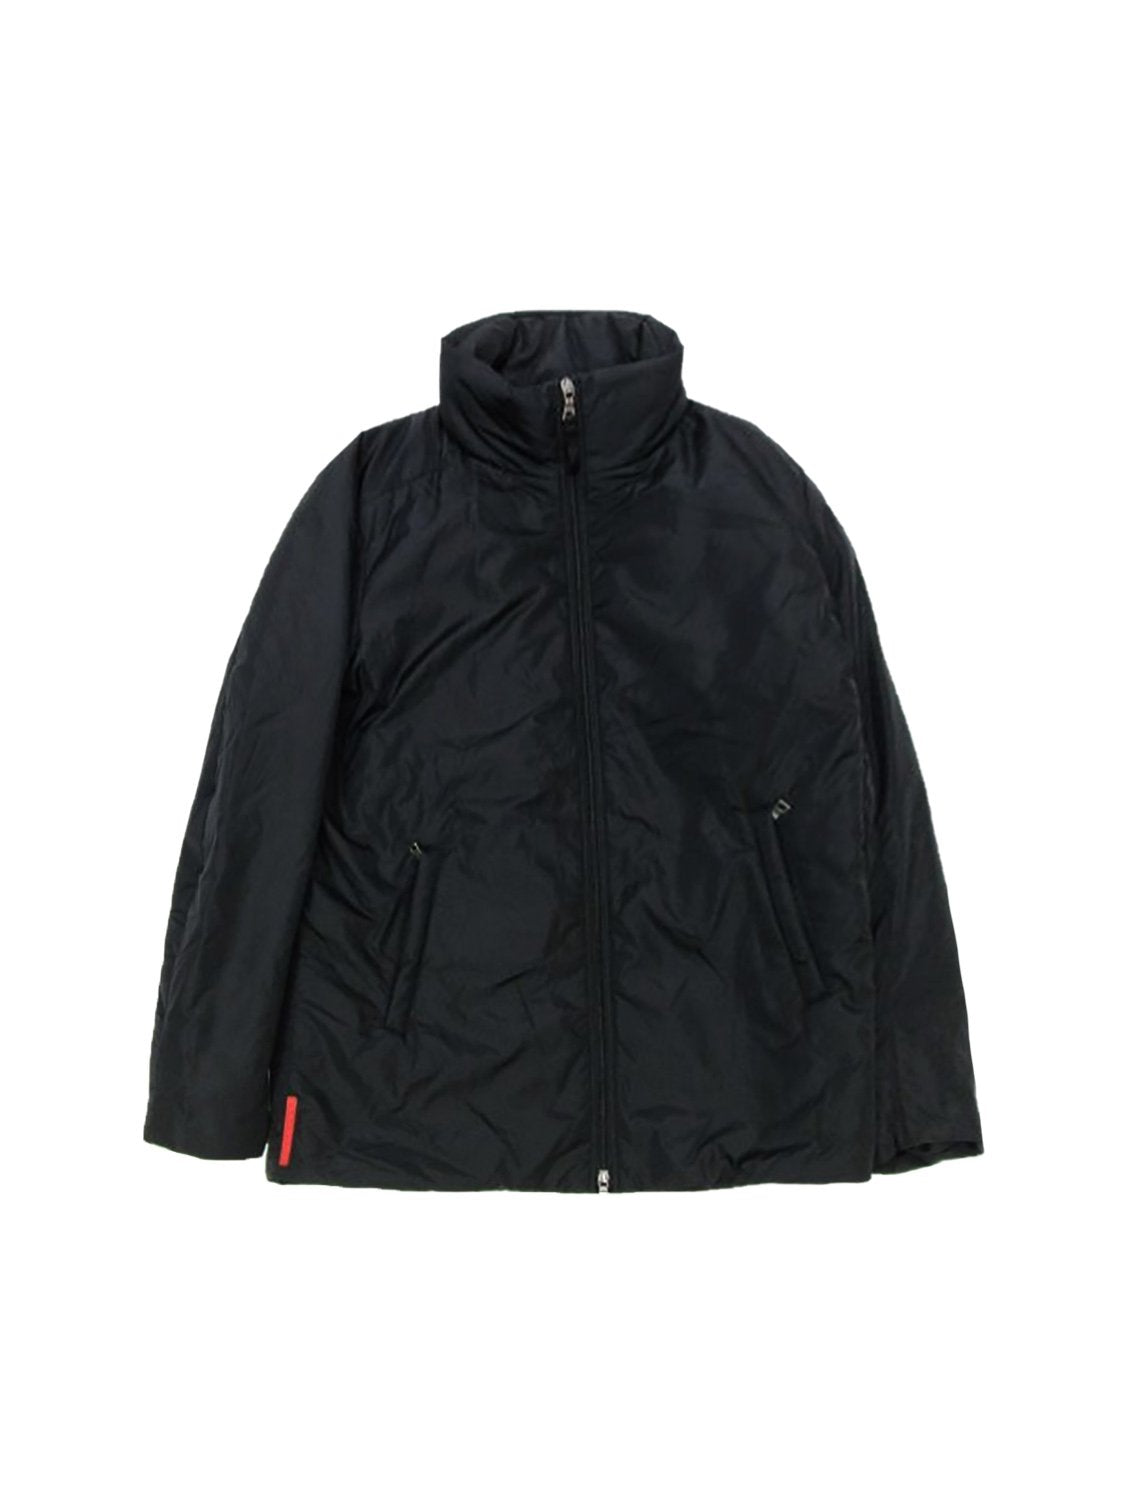 Prada 2000s Black Windbreaker Zip Jacket